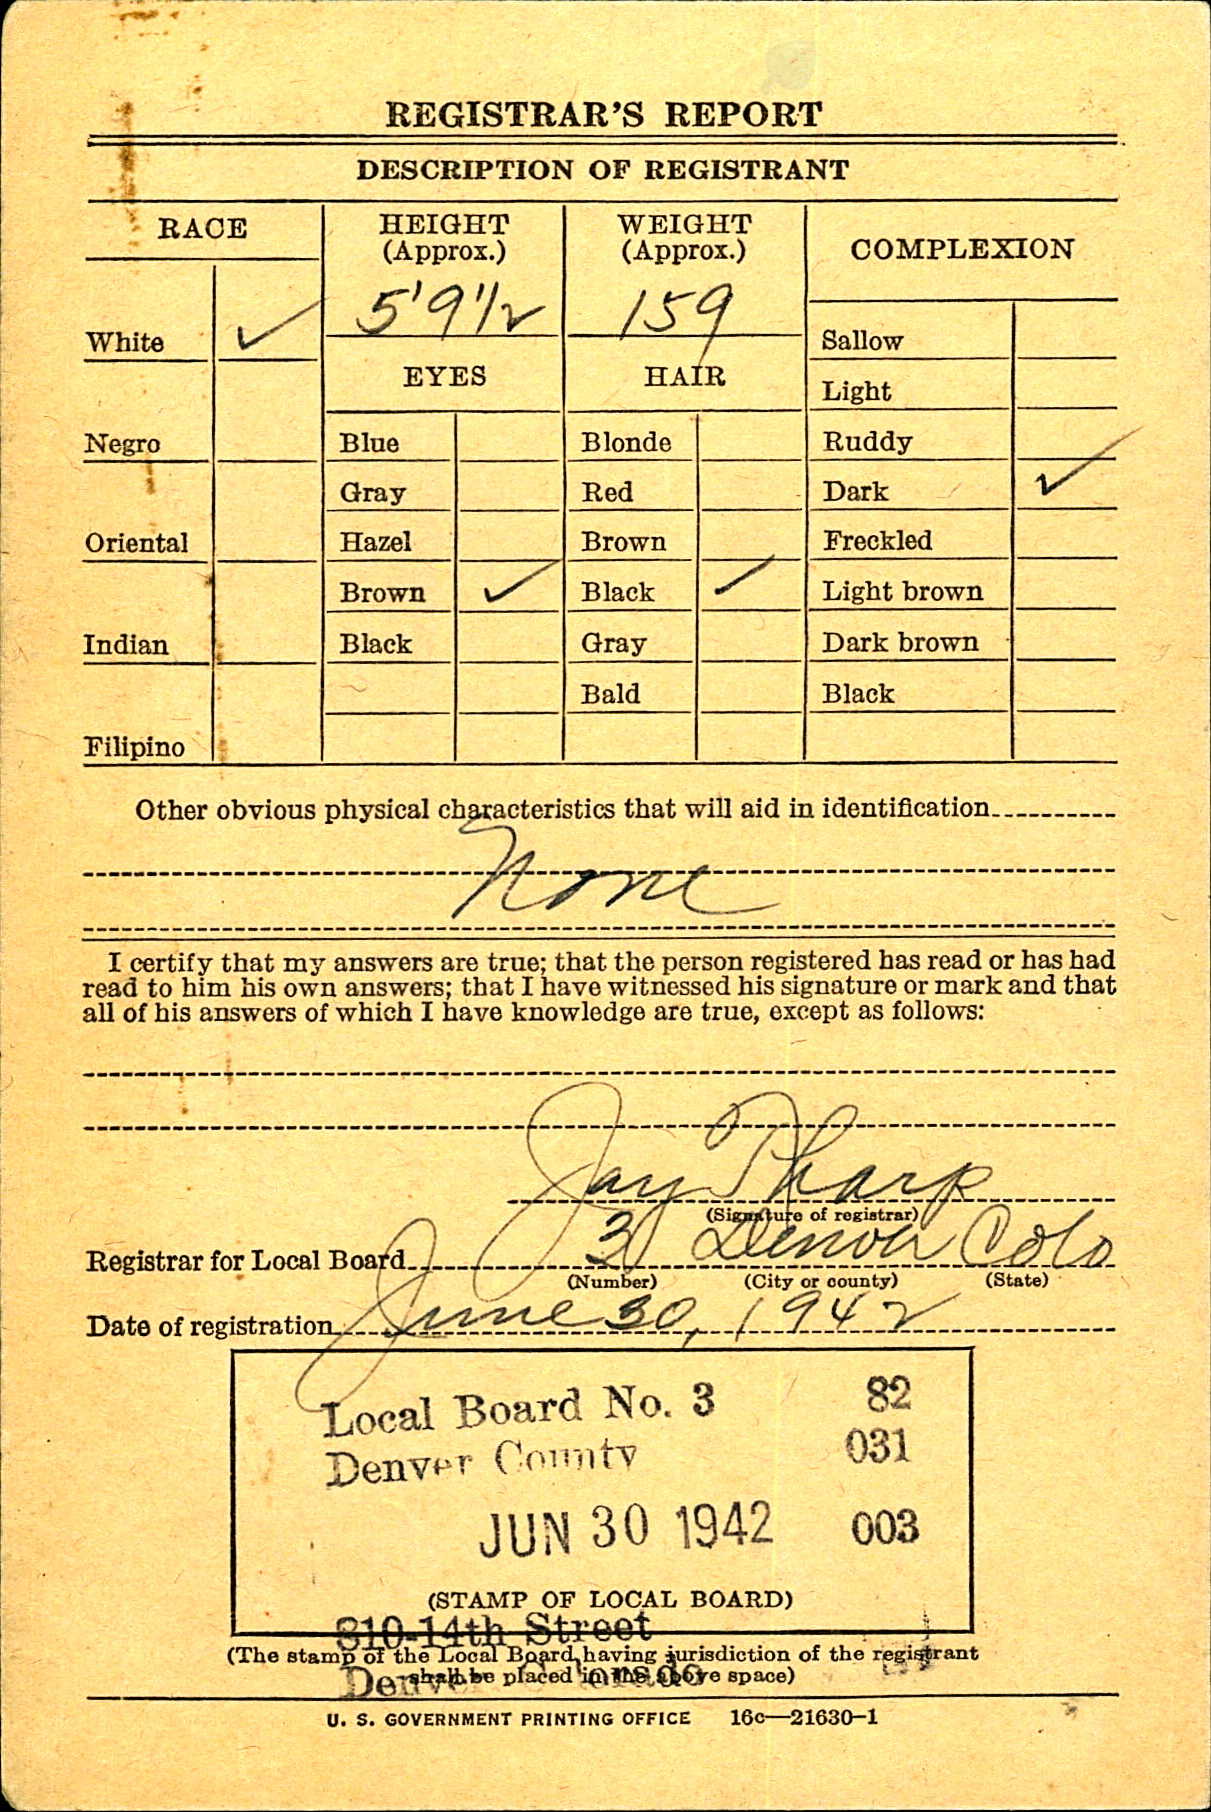 World War II draft card of John George Mahler, page 2